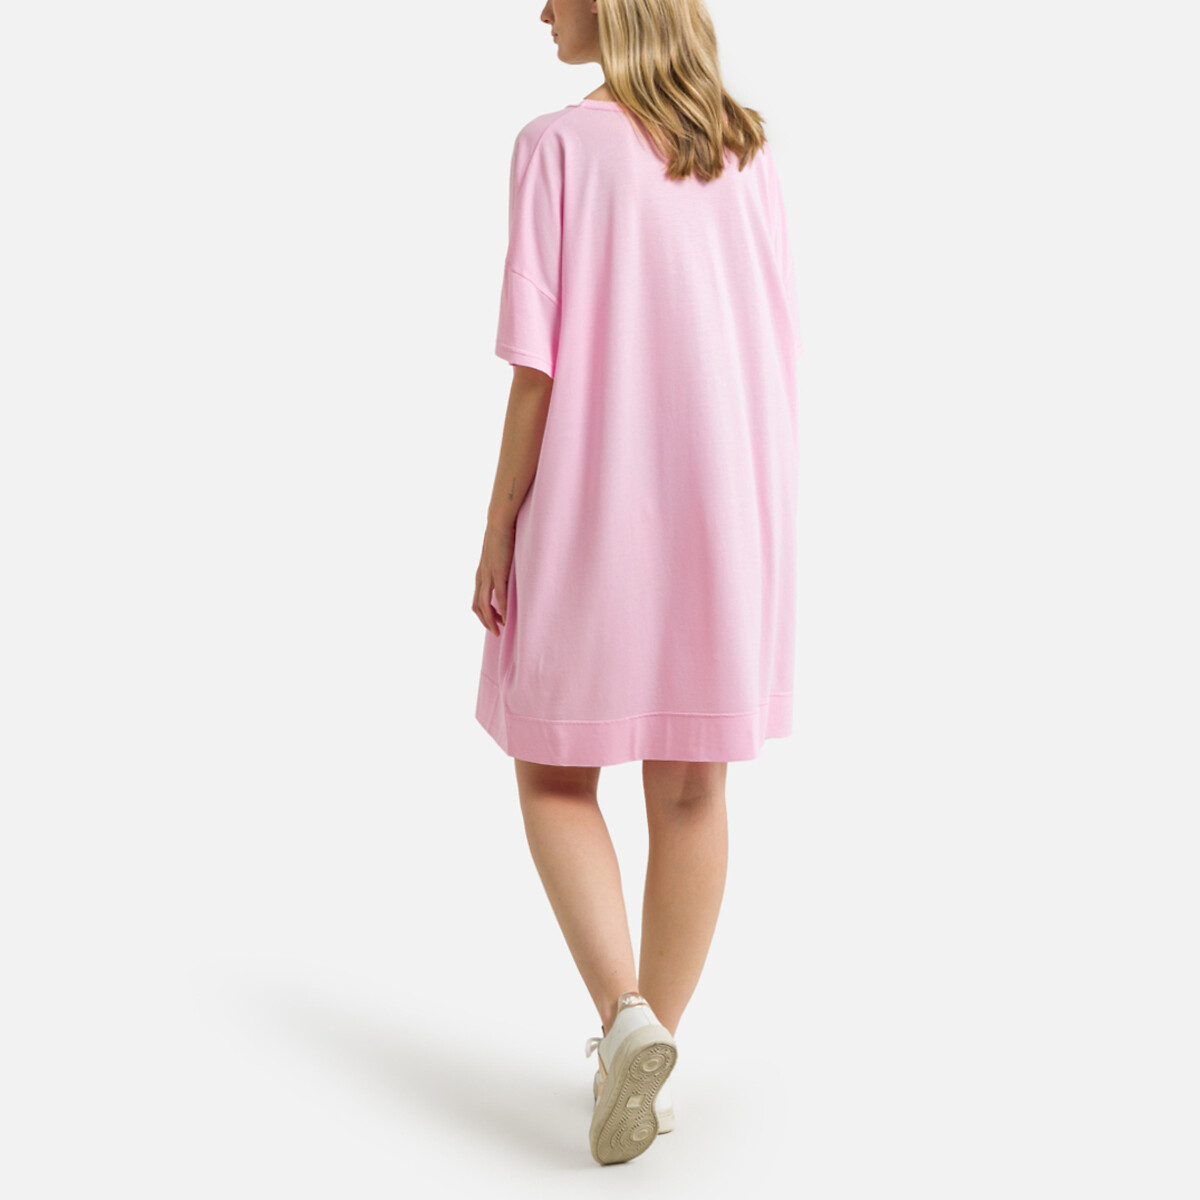 Прямое Платье-майка короткие рукава TUKYBAY XS/S розовый LaRedoute, размер XS/S Прямое Платье-майка короткие рукава TUKYBAY XS/S розовый - фото 4